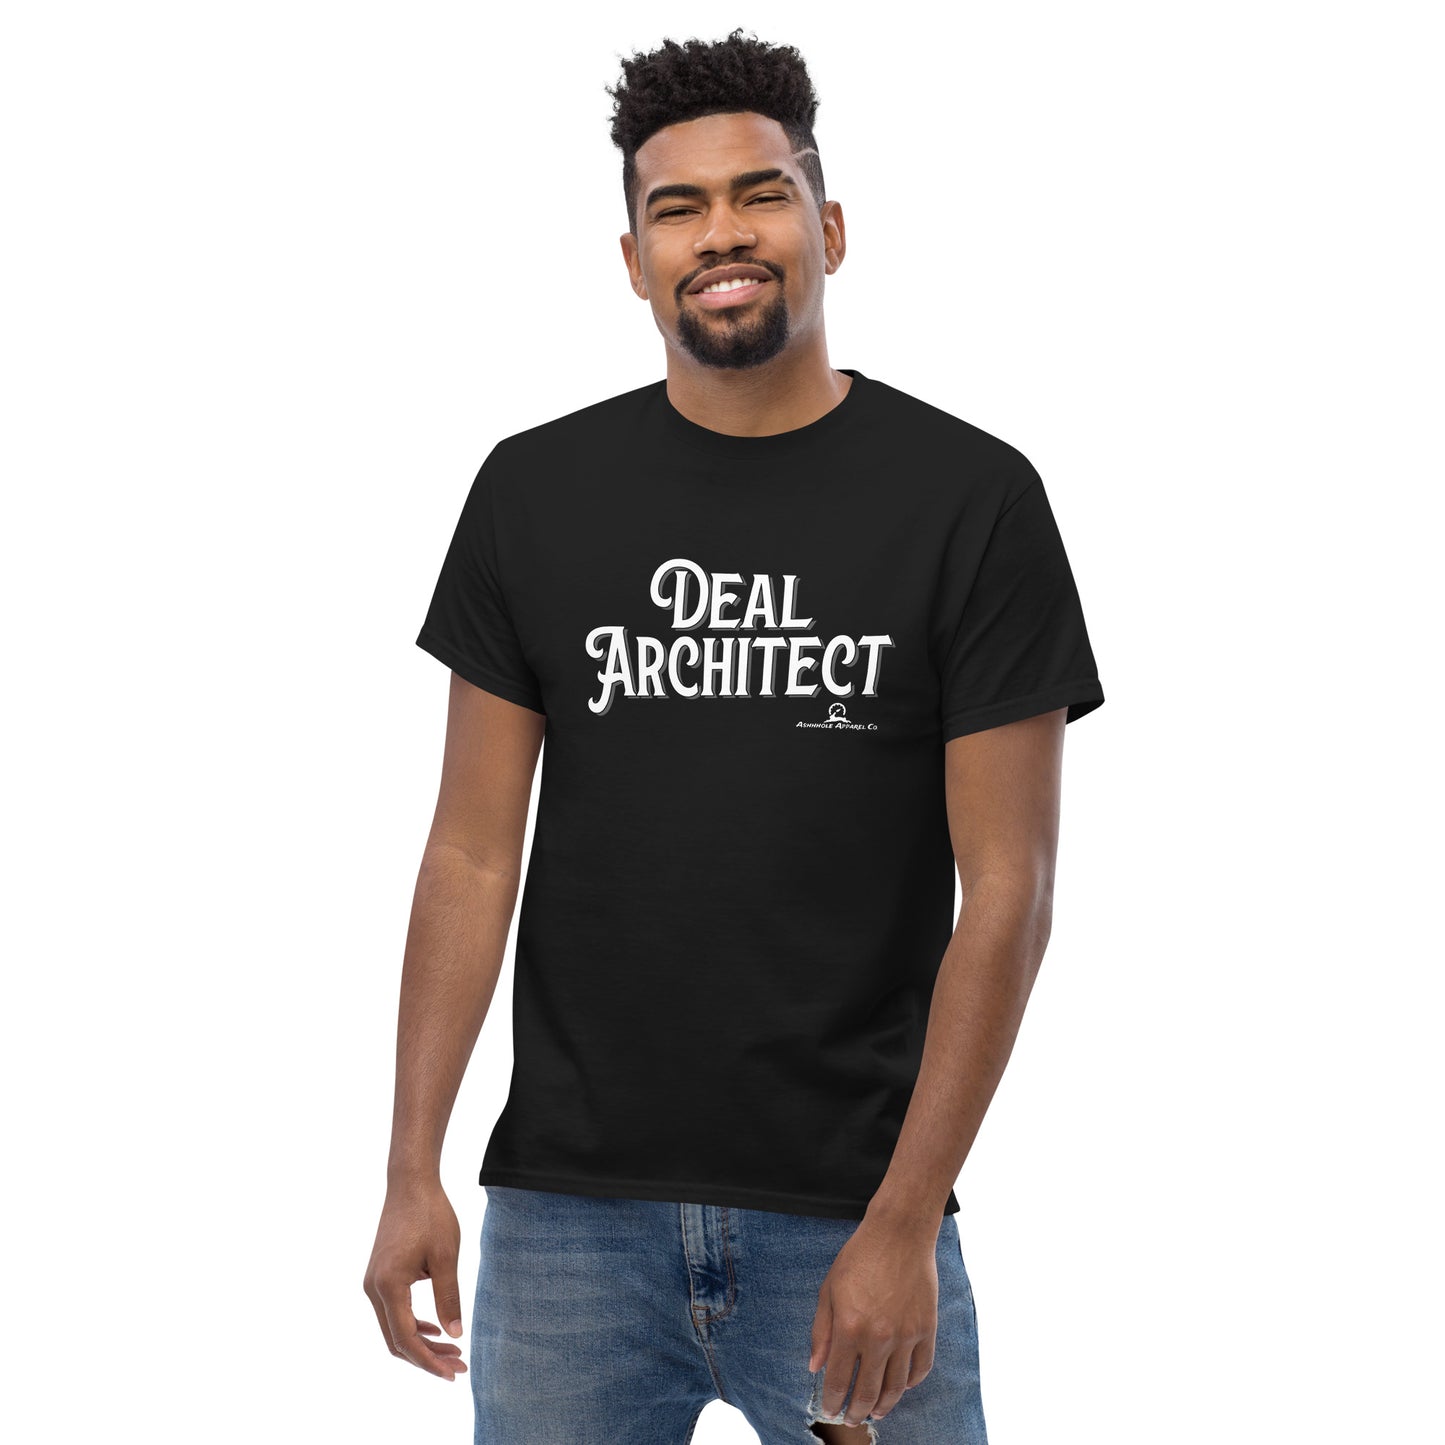 "Deal Architect" Men's classic tee